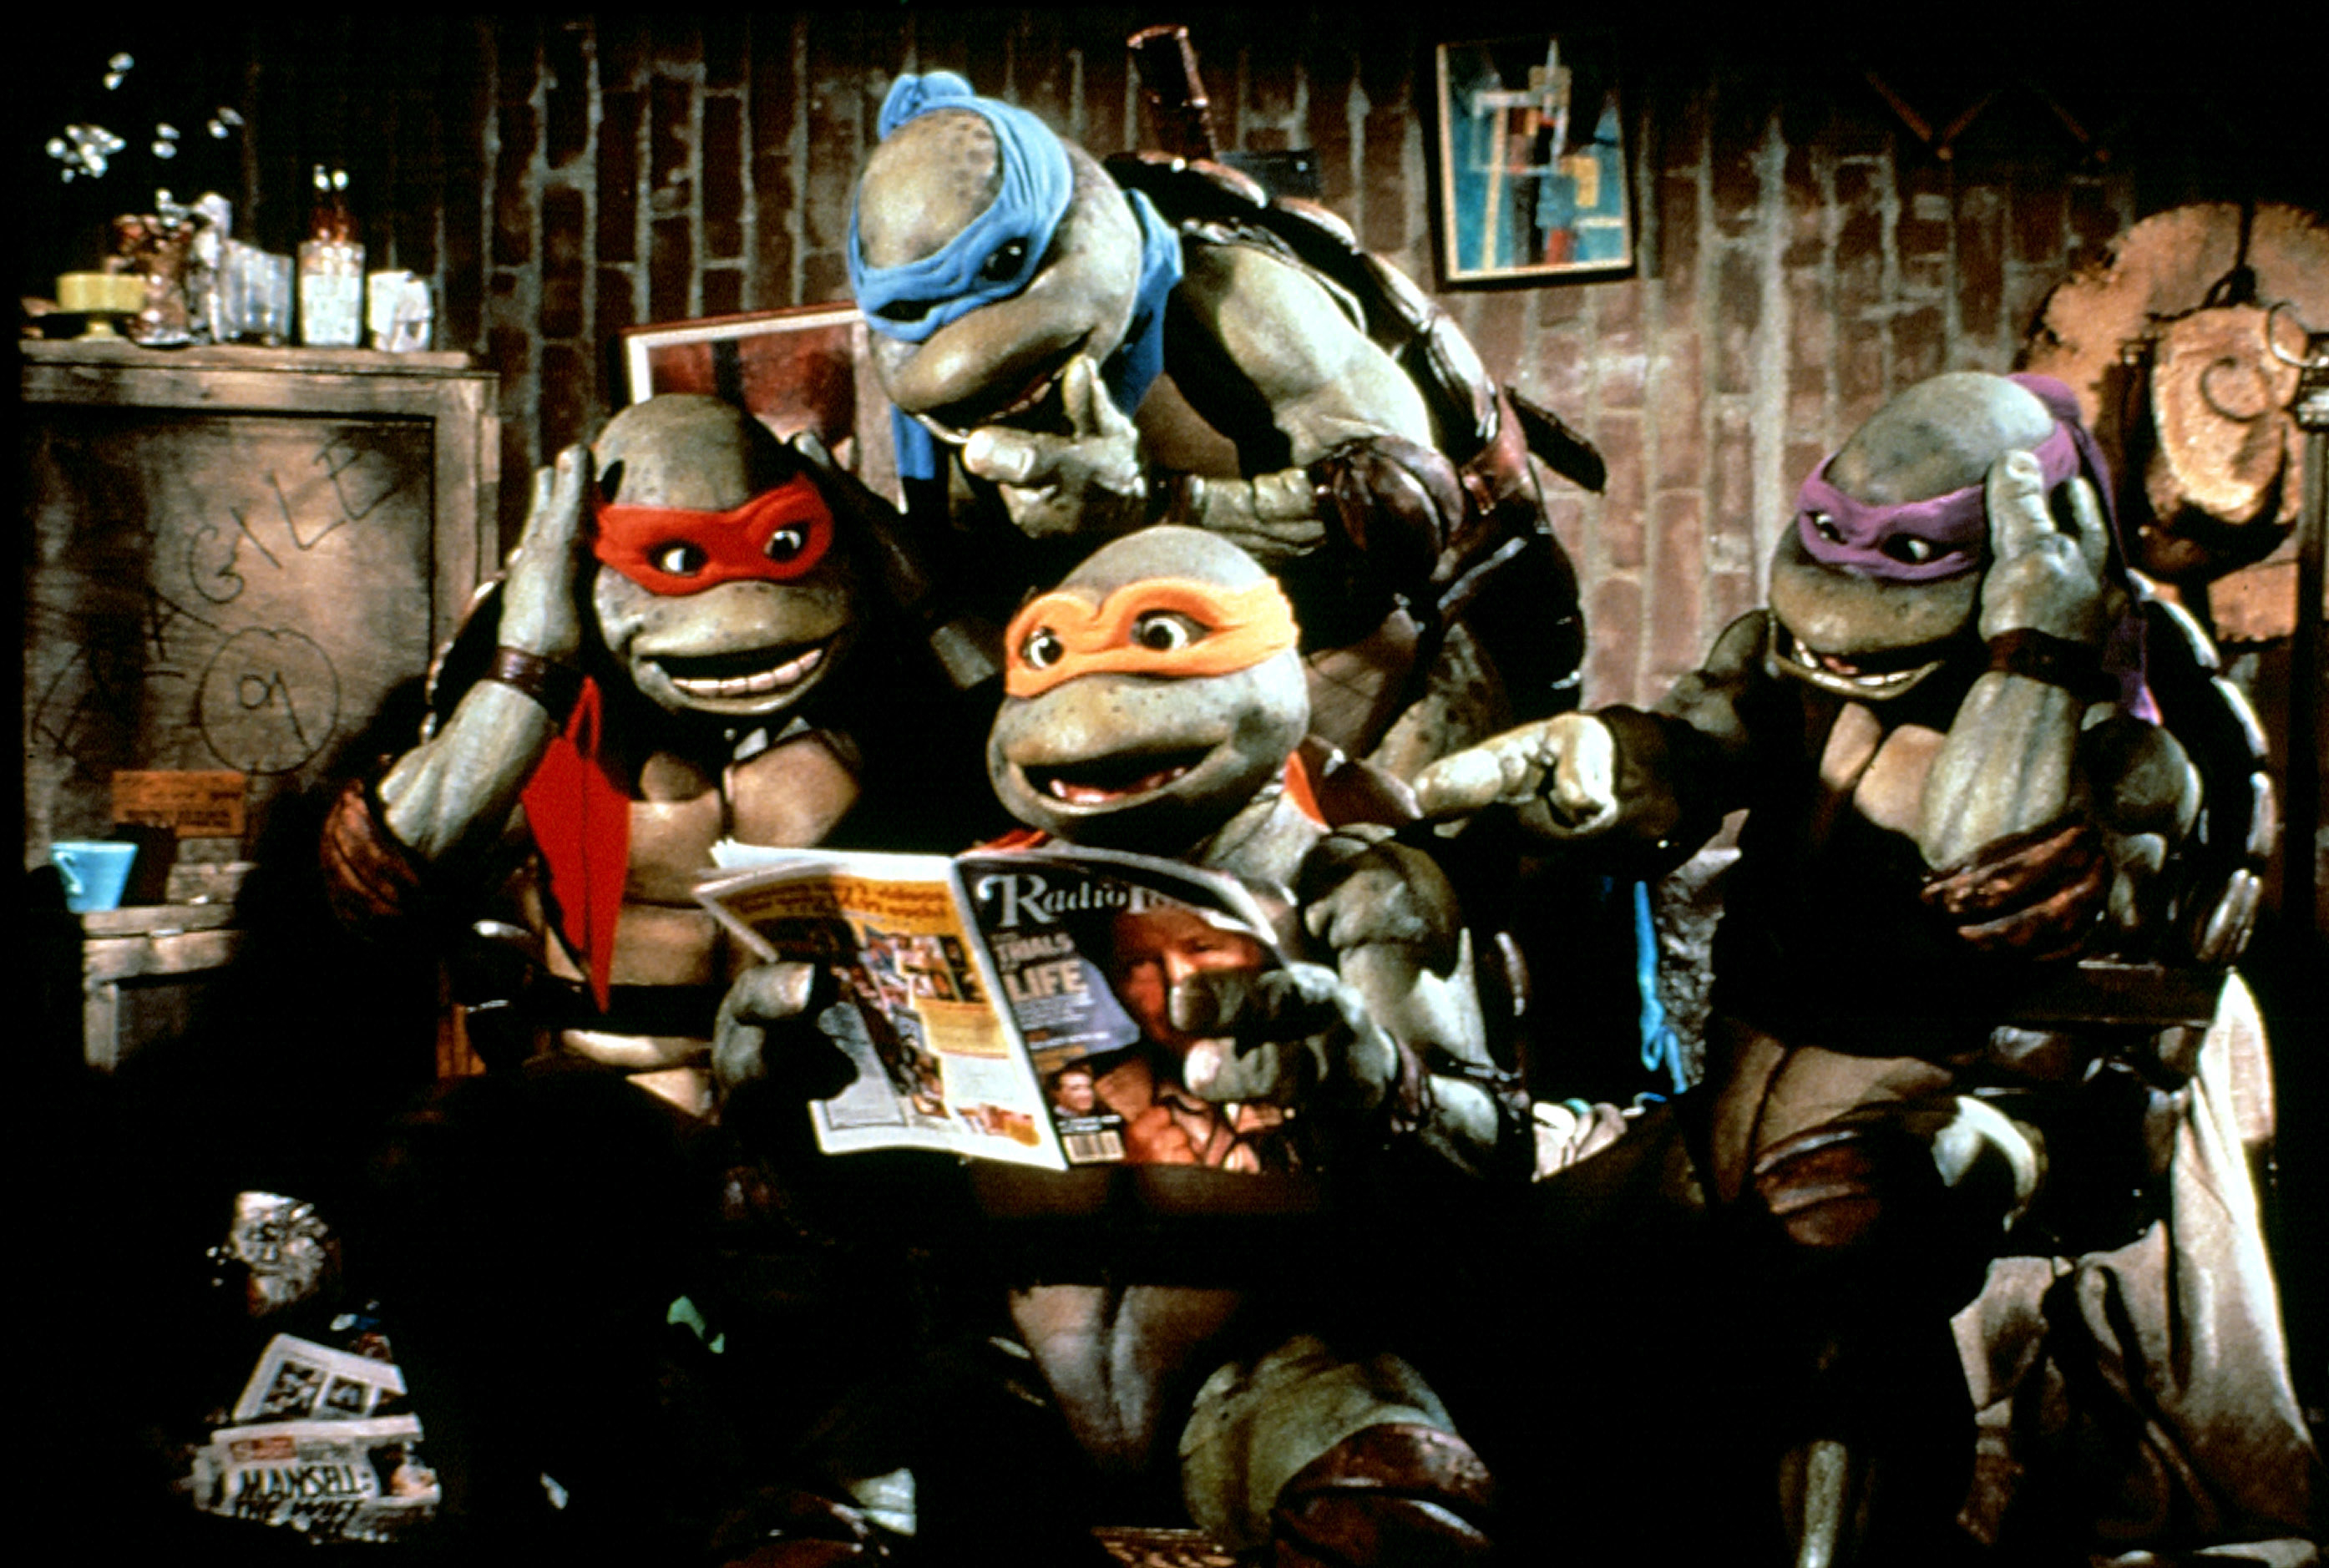 Michelangelo, Donatello, Raphael, and Leonardo looking at a magazine